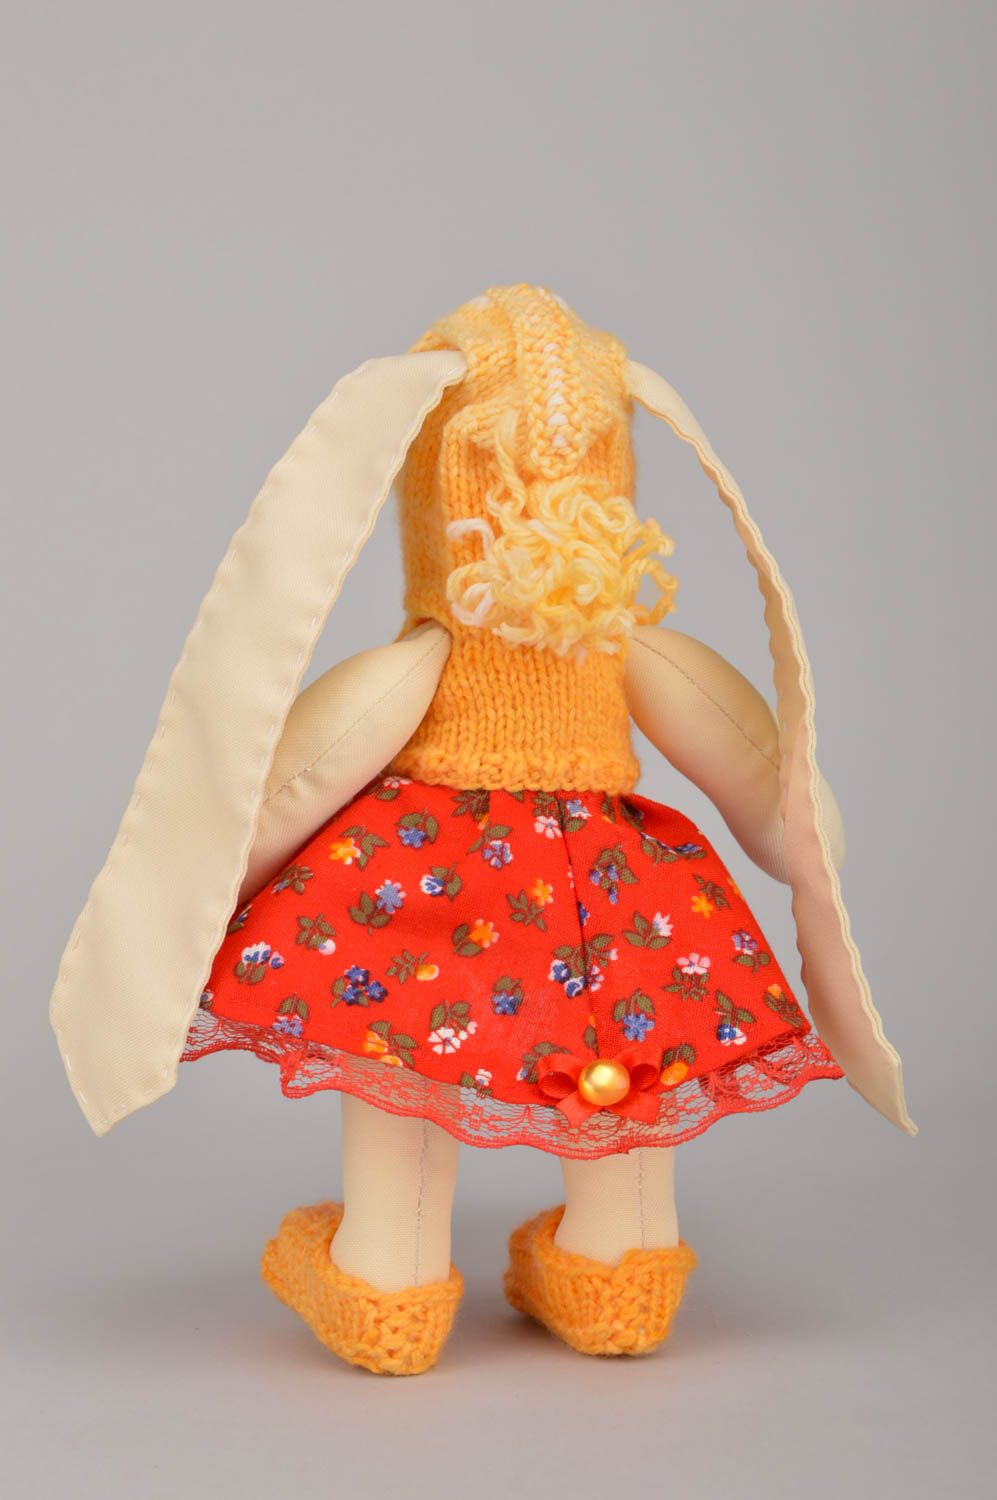 Unusual handmade childrens soft toy textile toy for kids interior design ideas photo 4